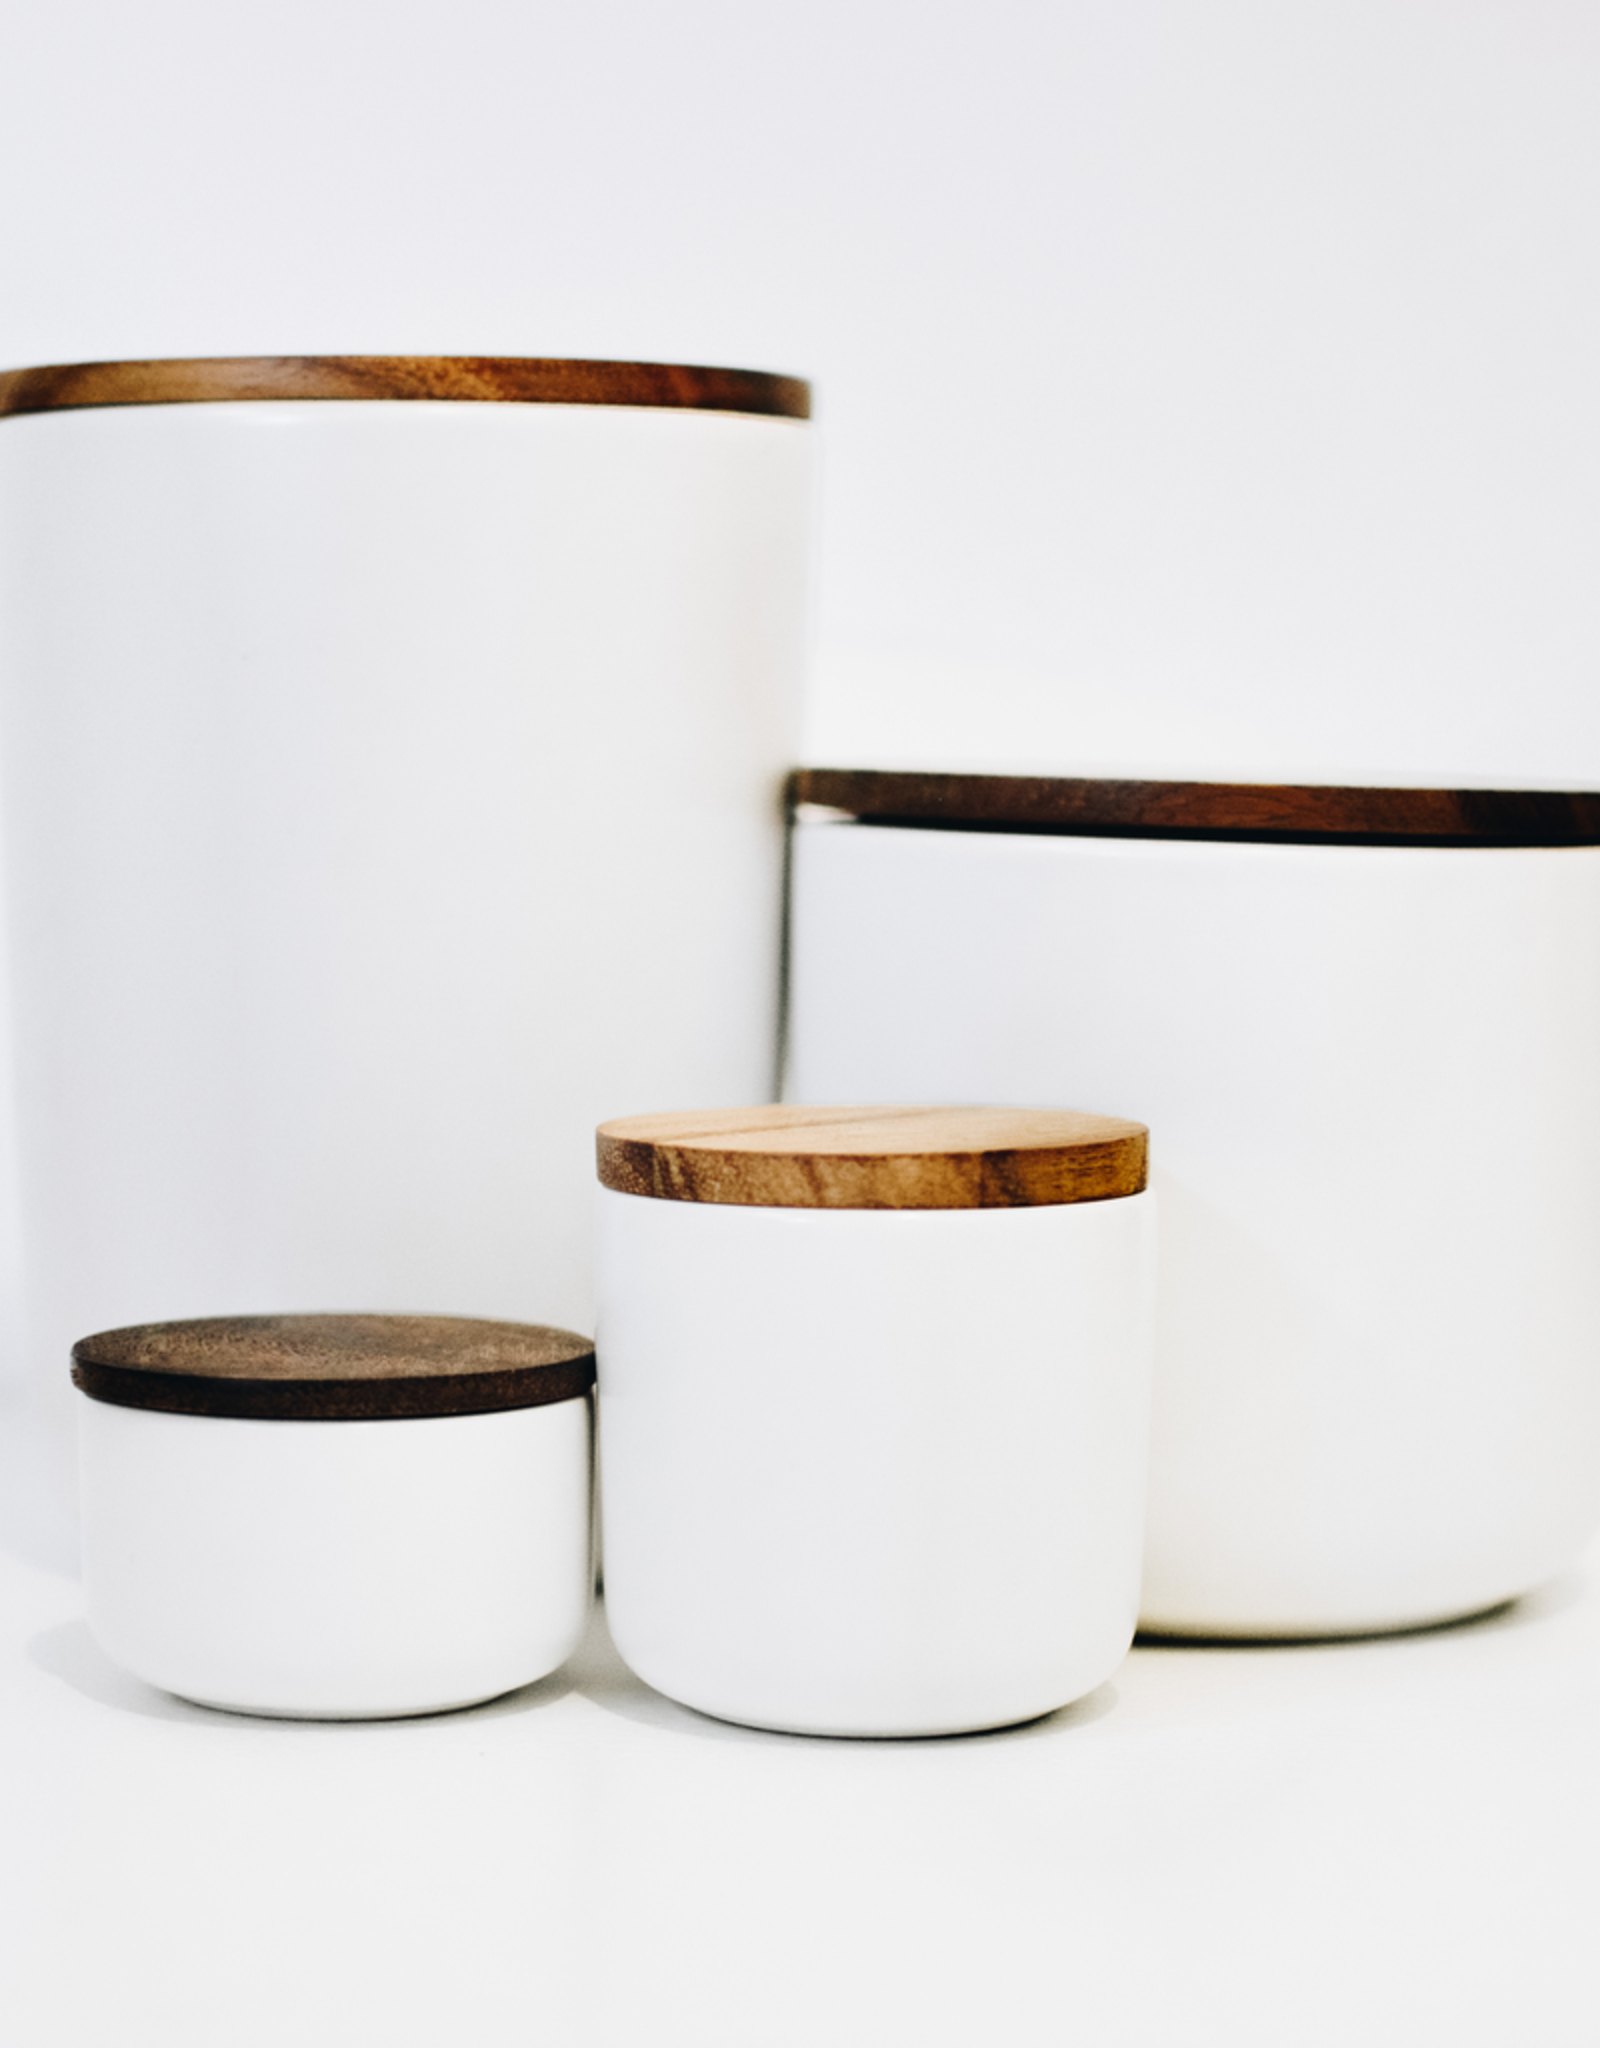 Medium White Stoneware Container with Acacia Lid D4" H3.75"